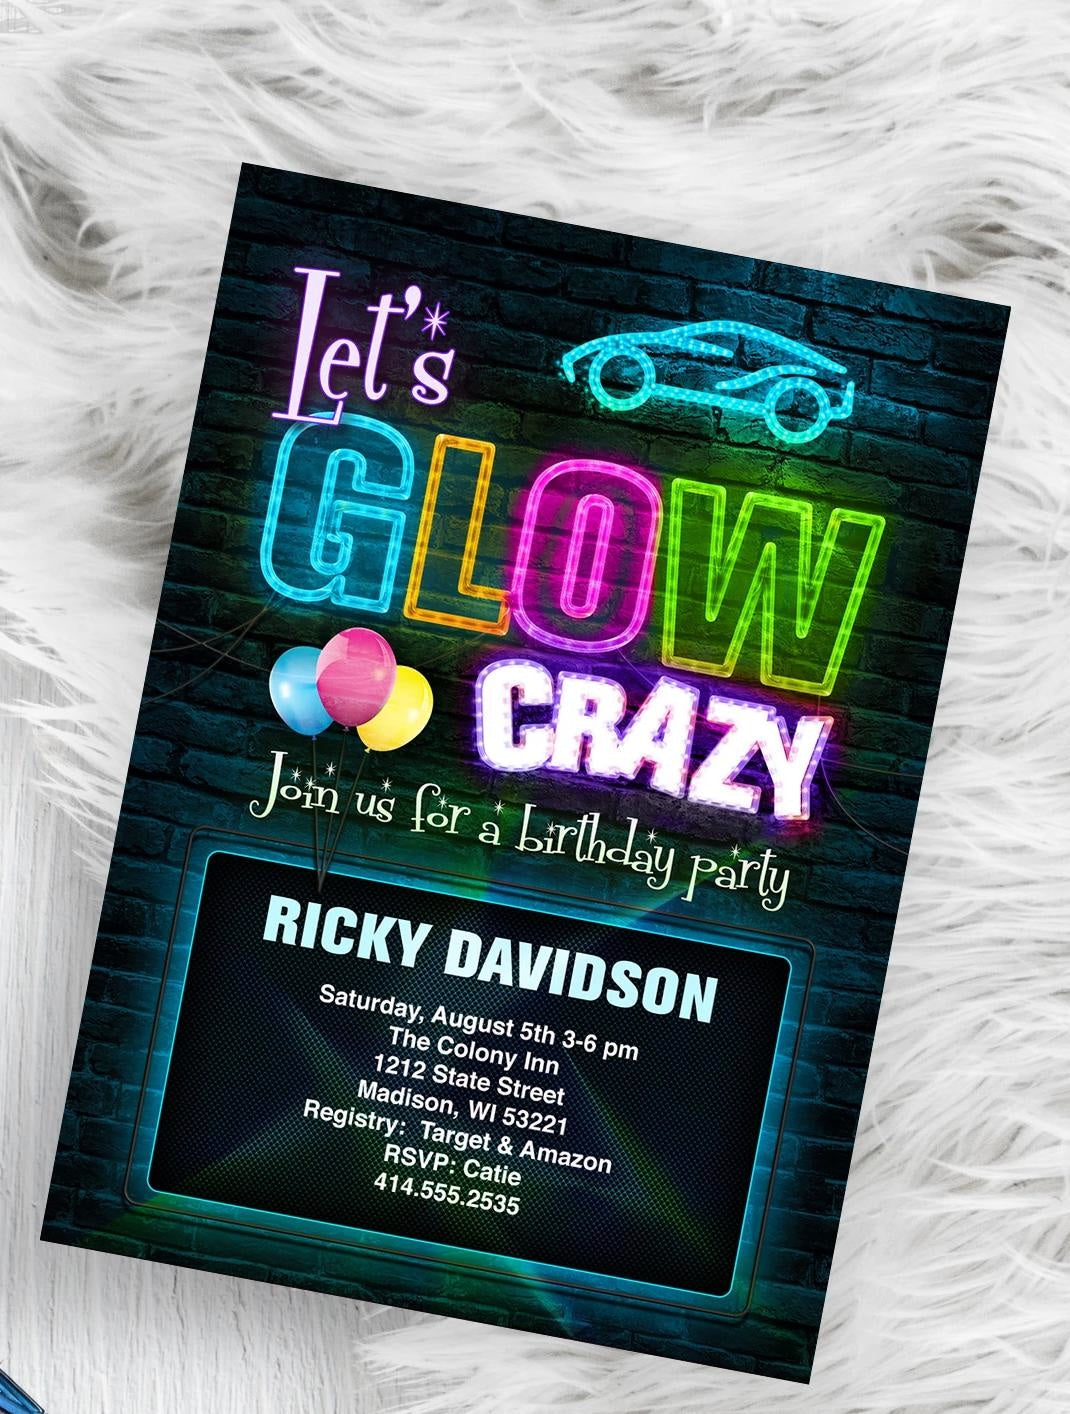 Roxx Designs - Boy Glow Party Invitation - Neon Light Glow Birthday Party Invite - Lets Glow ...